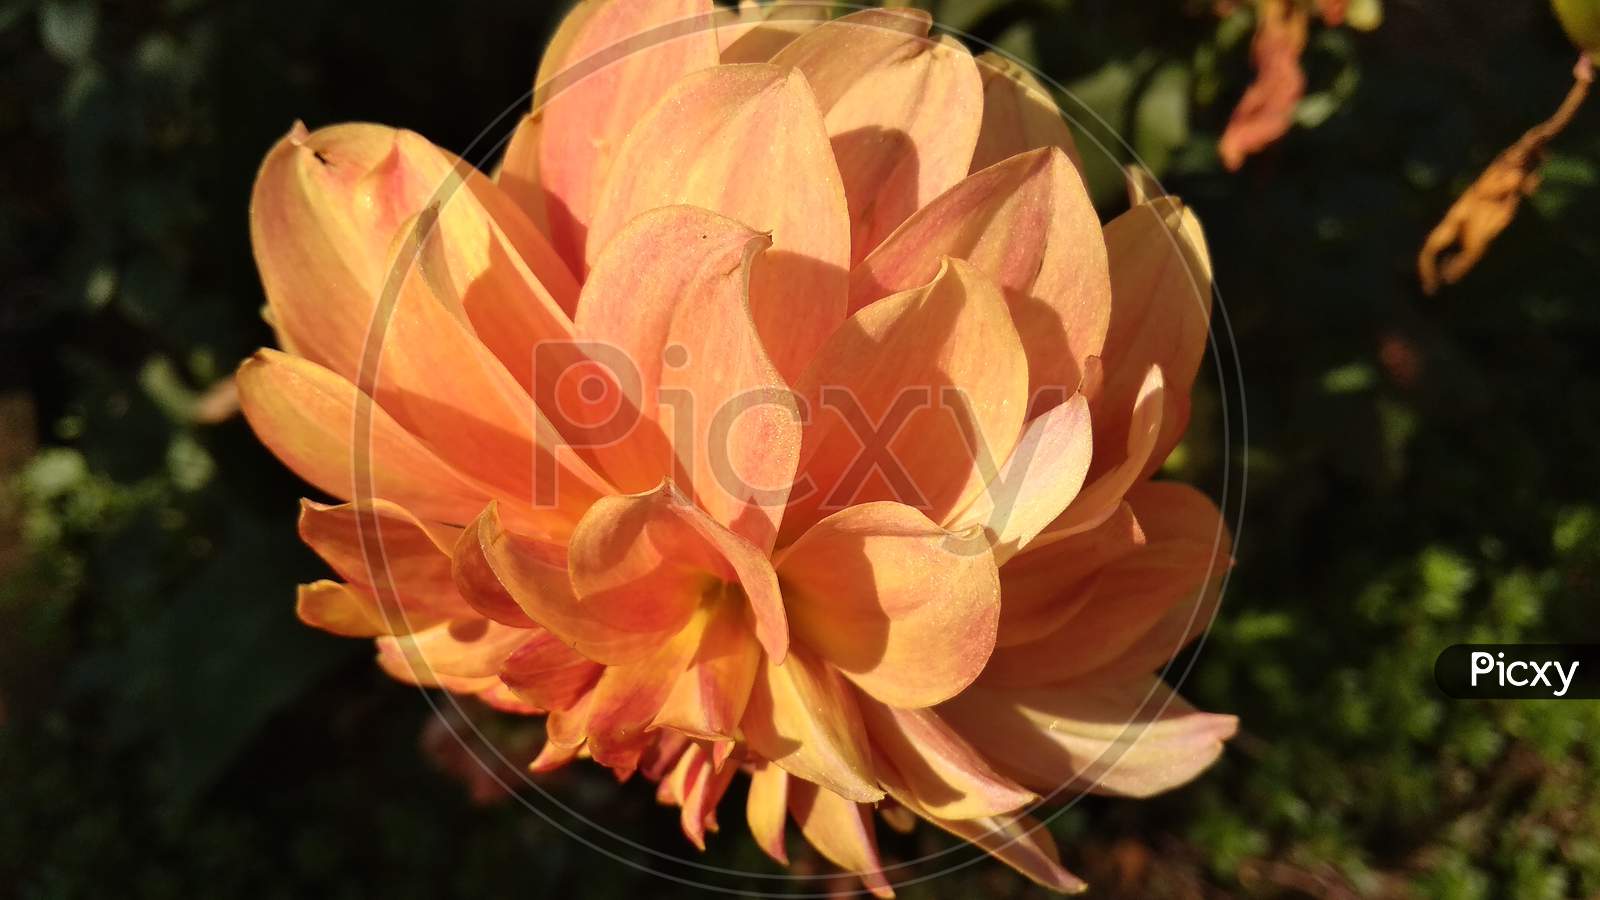 Beautifull Dahlia orange petal flowering plant